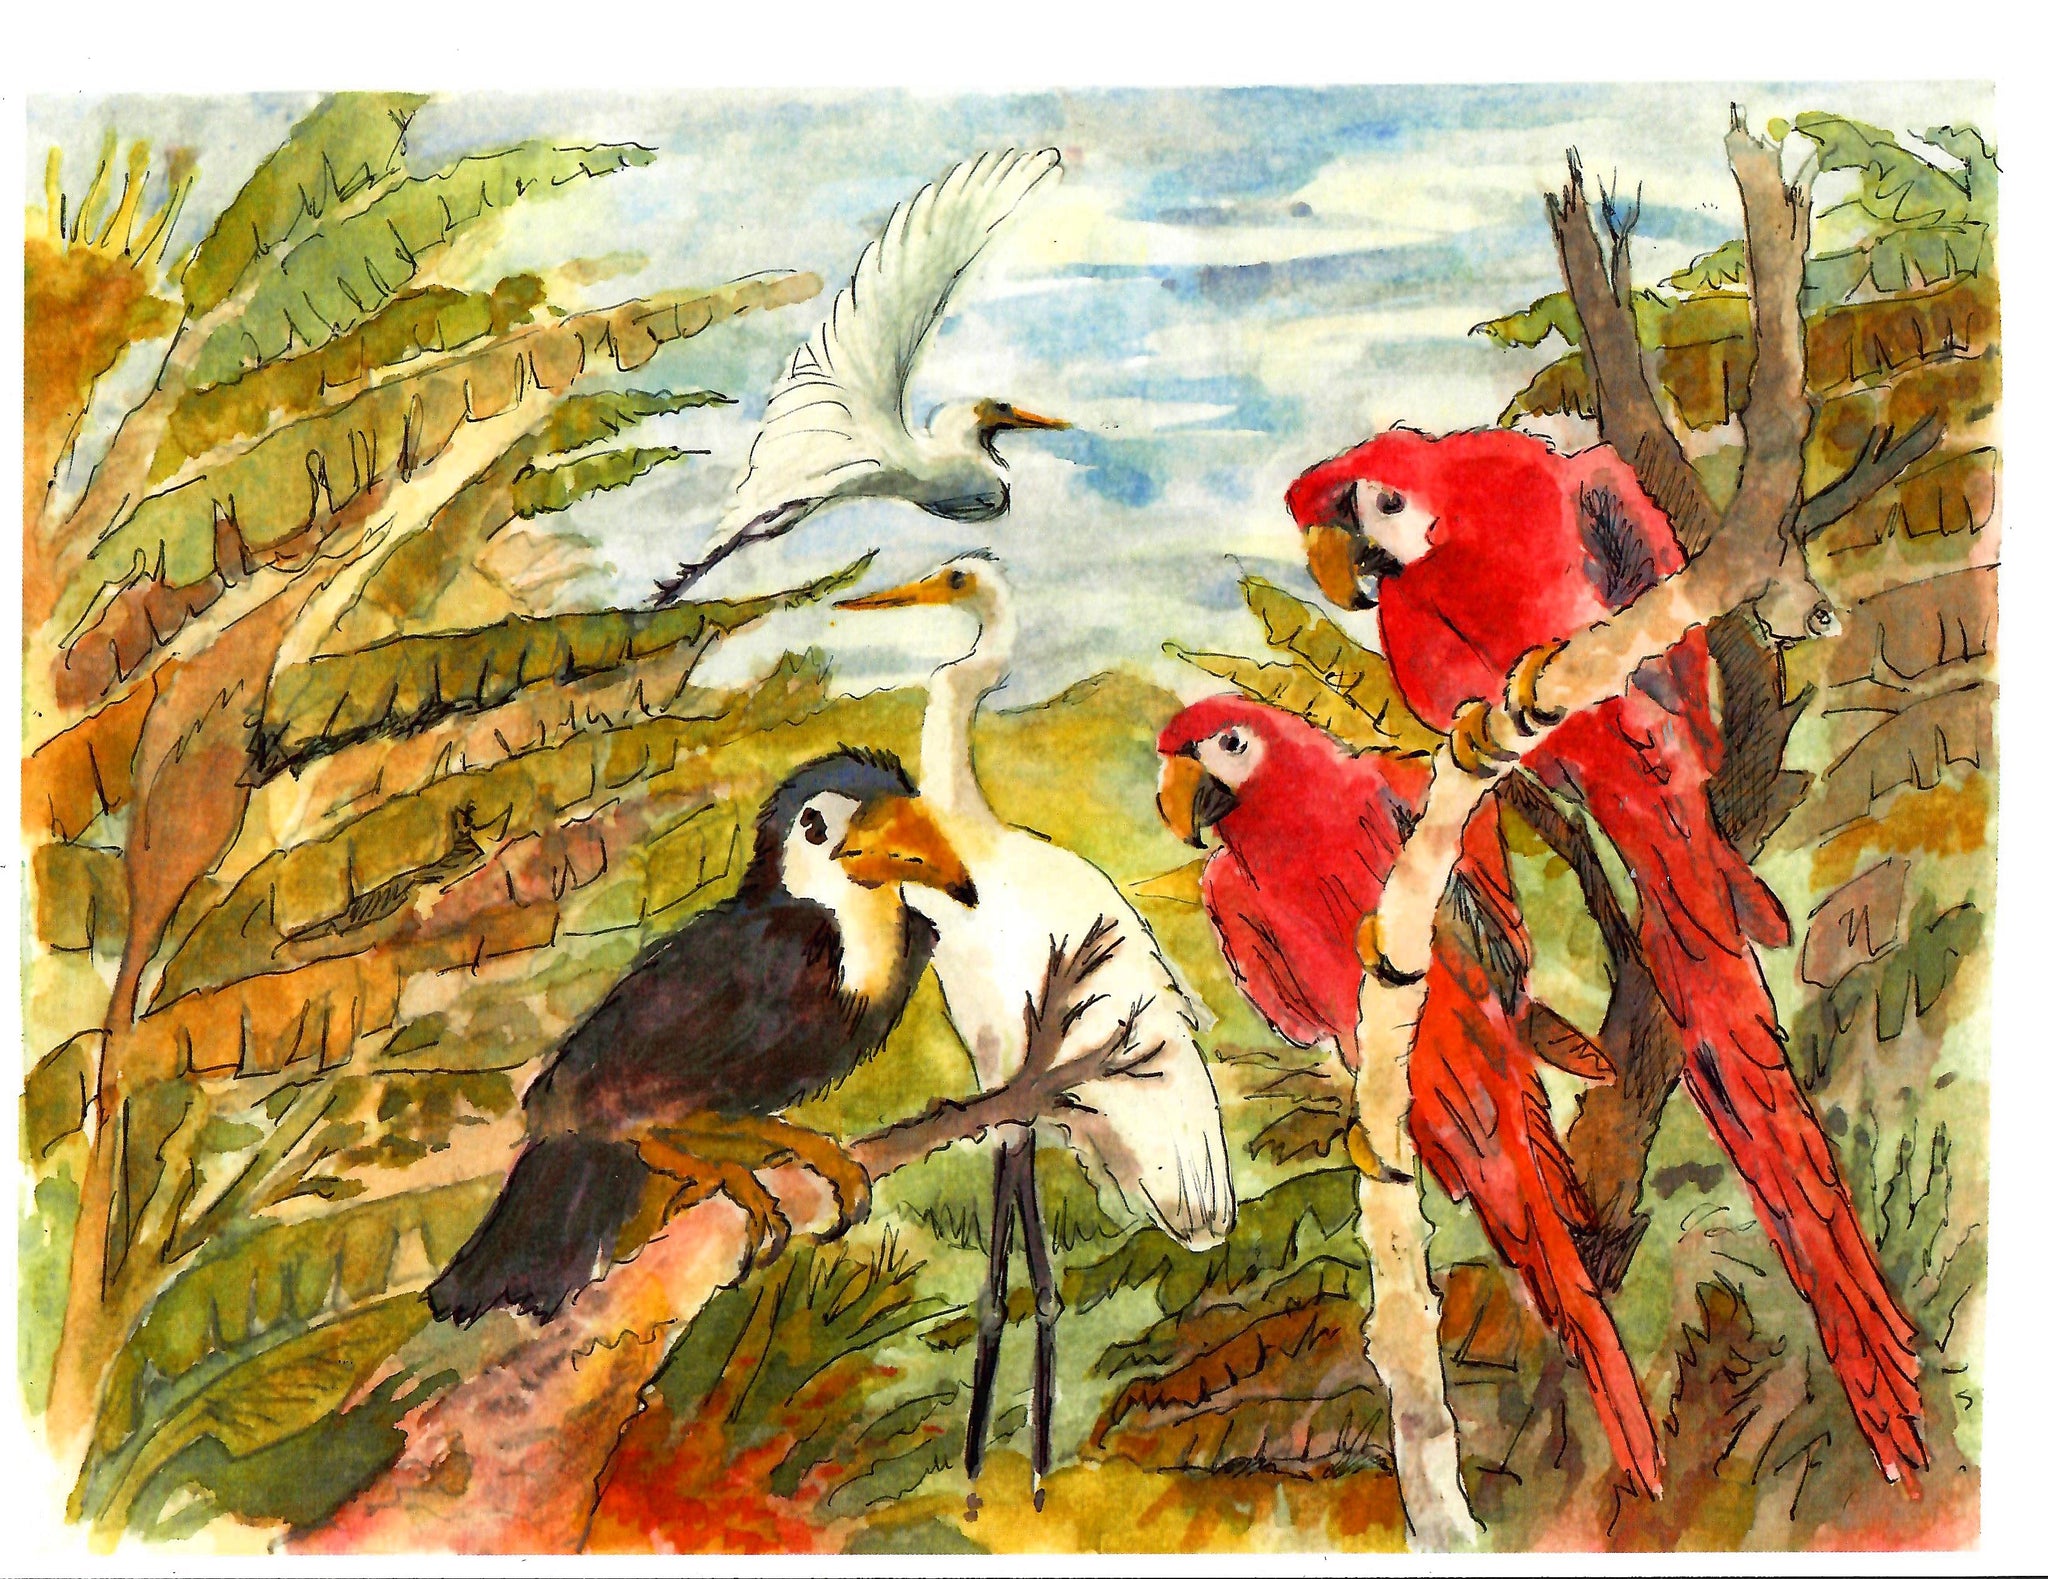 NATURE - BIRDS OF THE JUNGLE - TOUCAN, PARROTS, STORKS